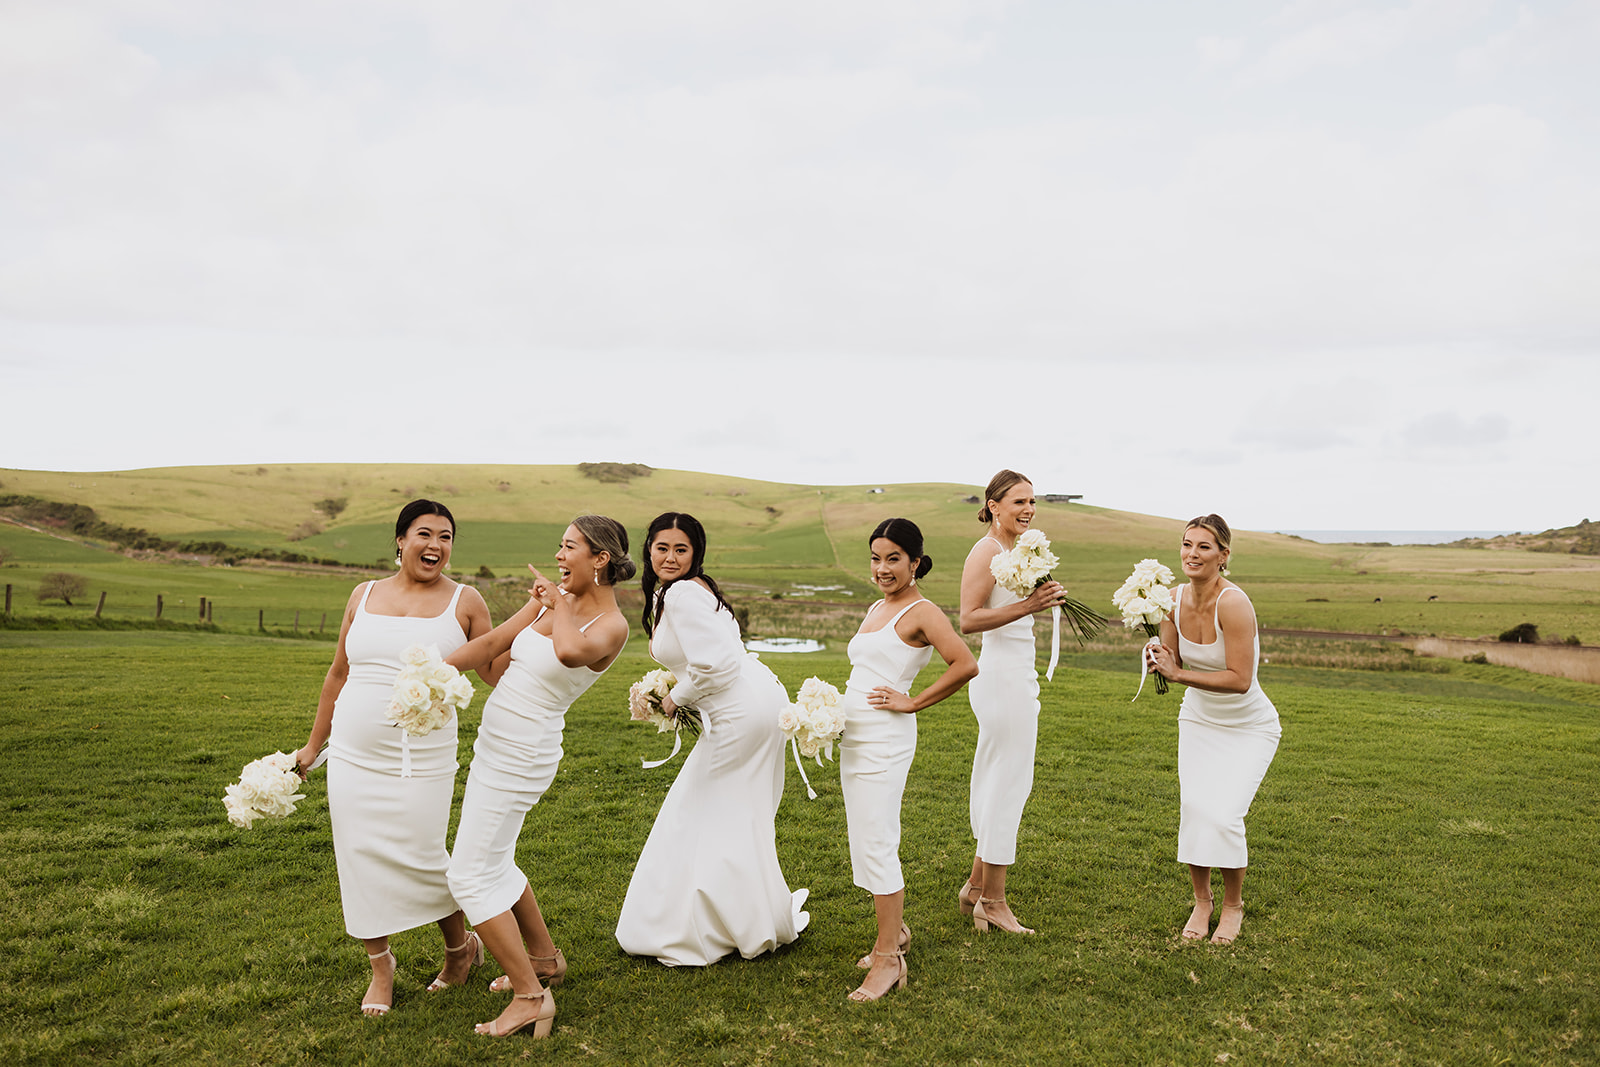 The bride and bridesmaids at Seacliff House